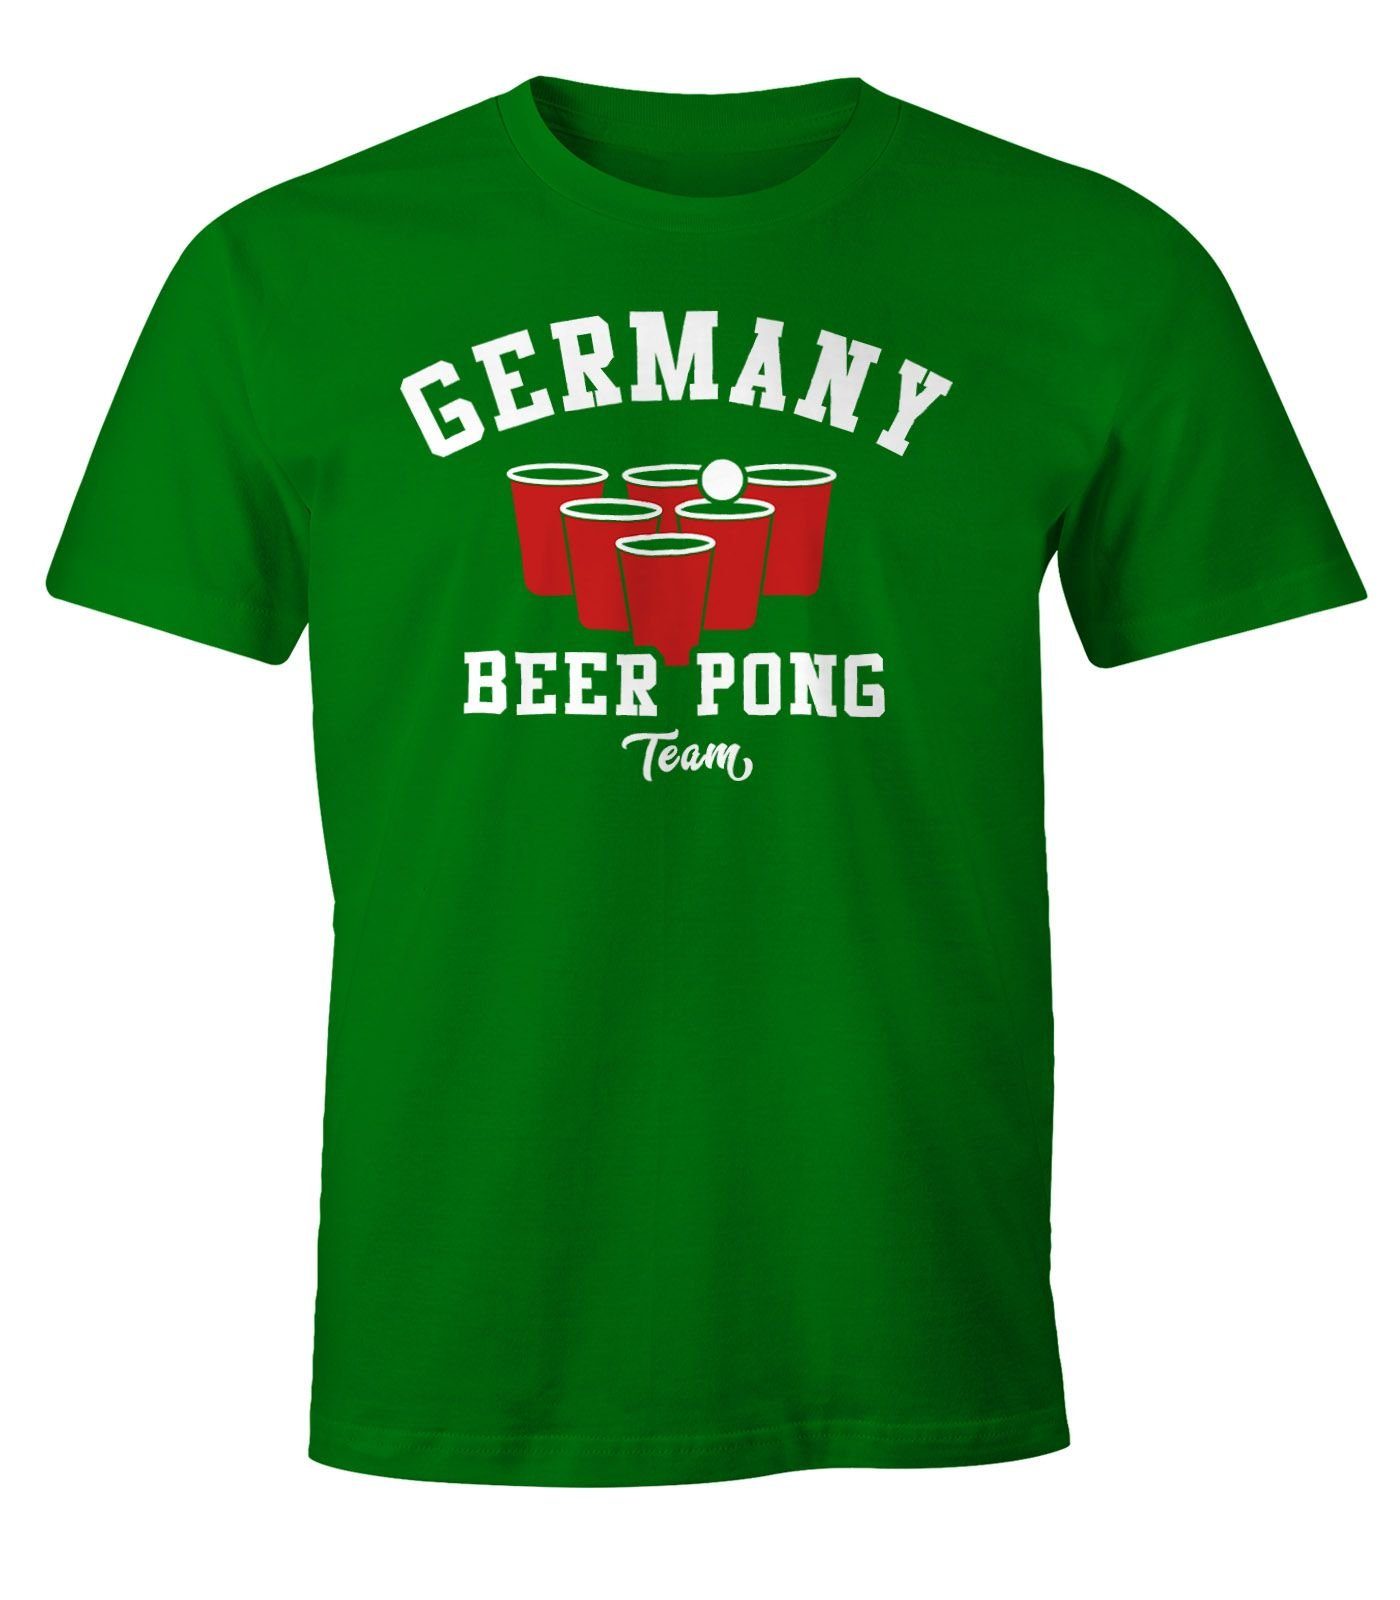 MoonWorks Print-Shirt Herren T-Shirt Germany Beer Pong Team Bier Fun-Shirt Moonworks® mit Print grün